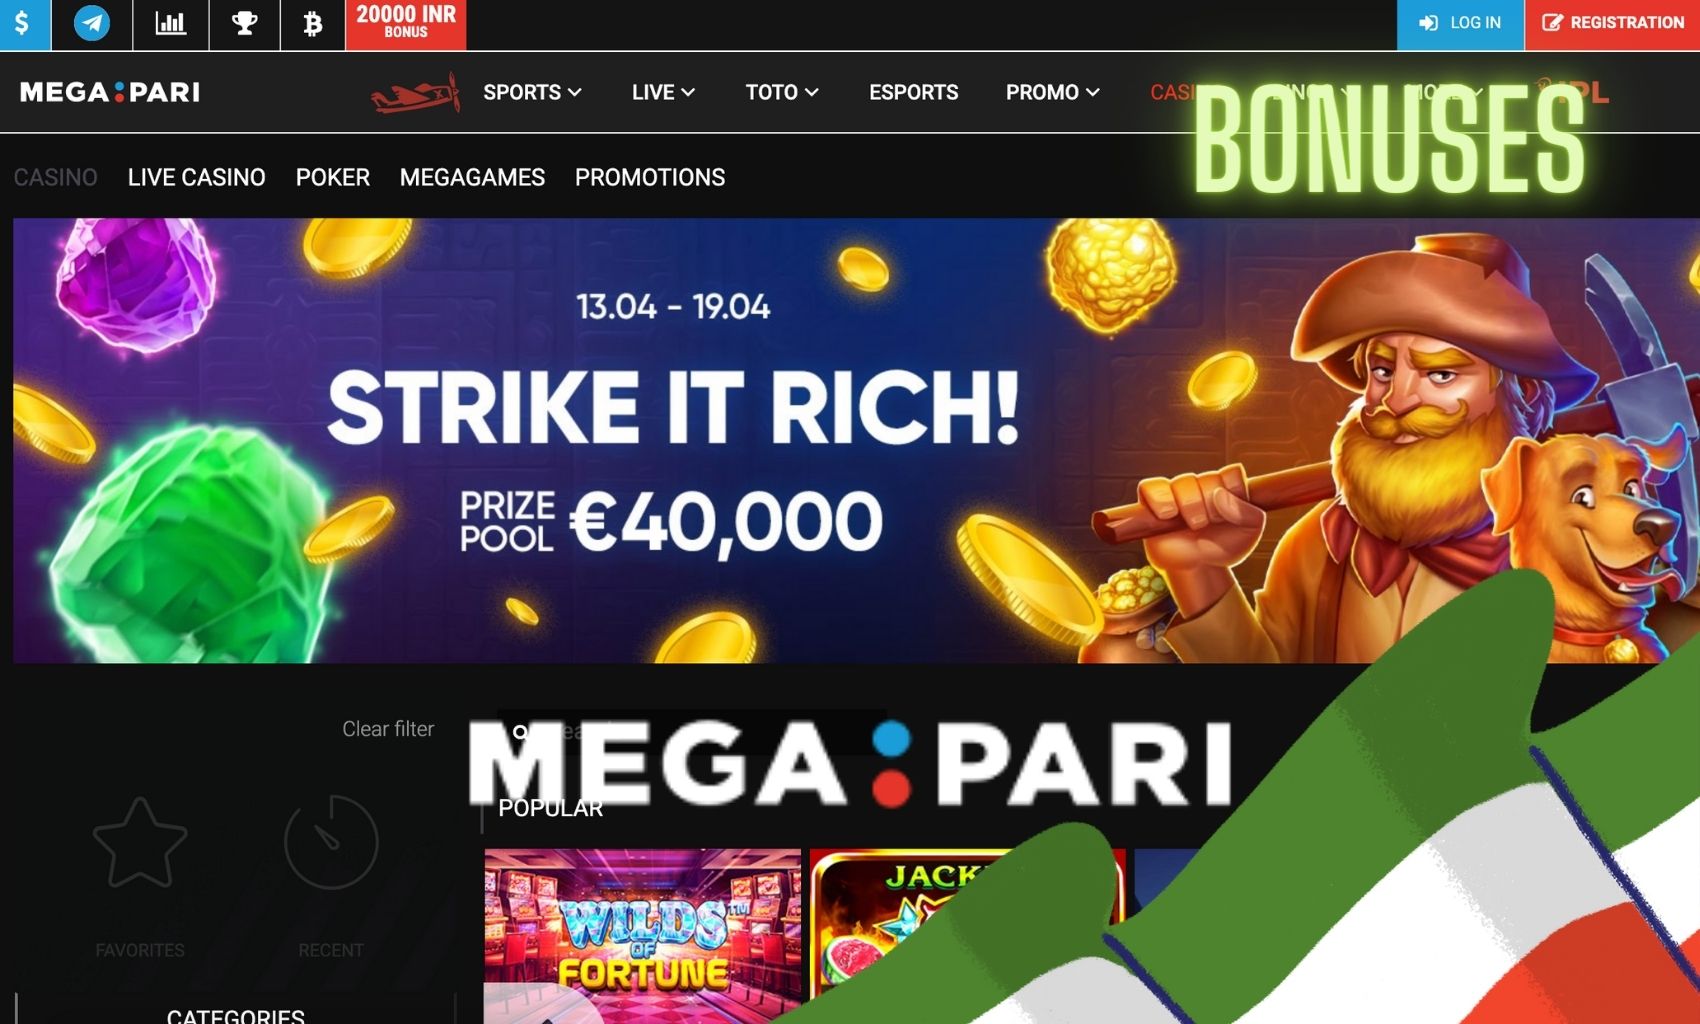 Megapari site bonuses for players from India